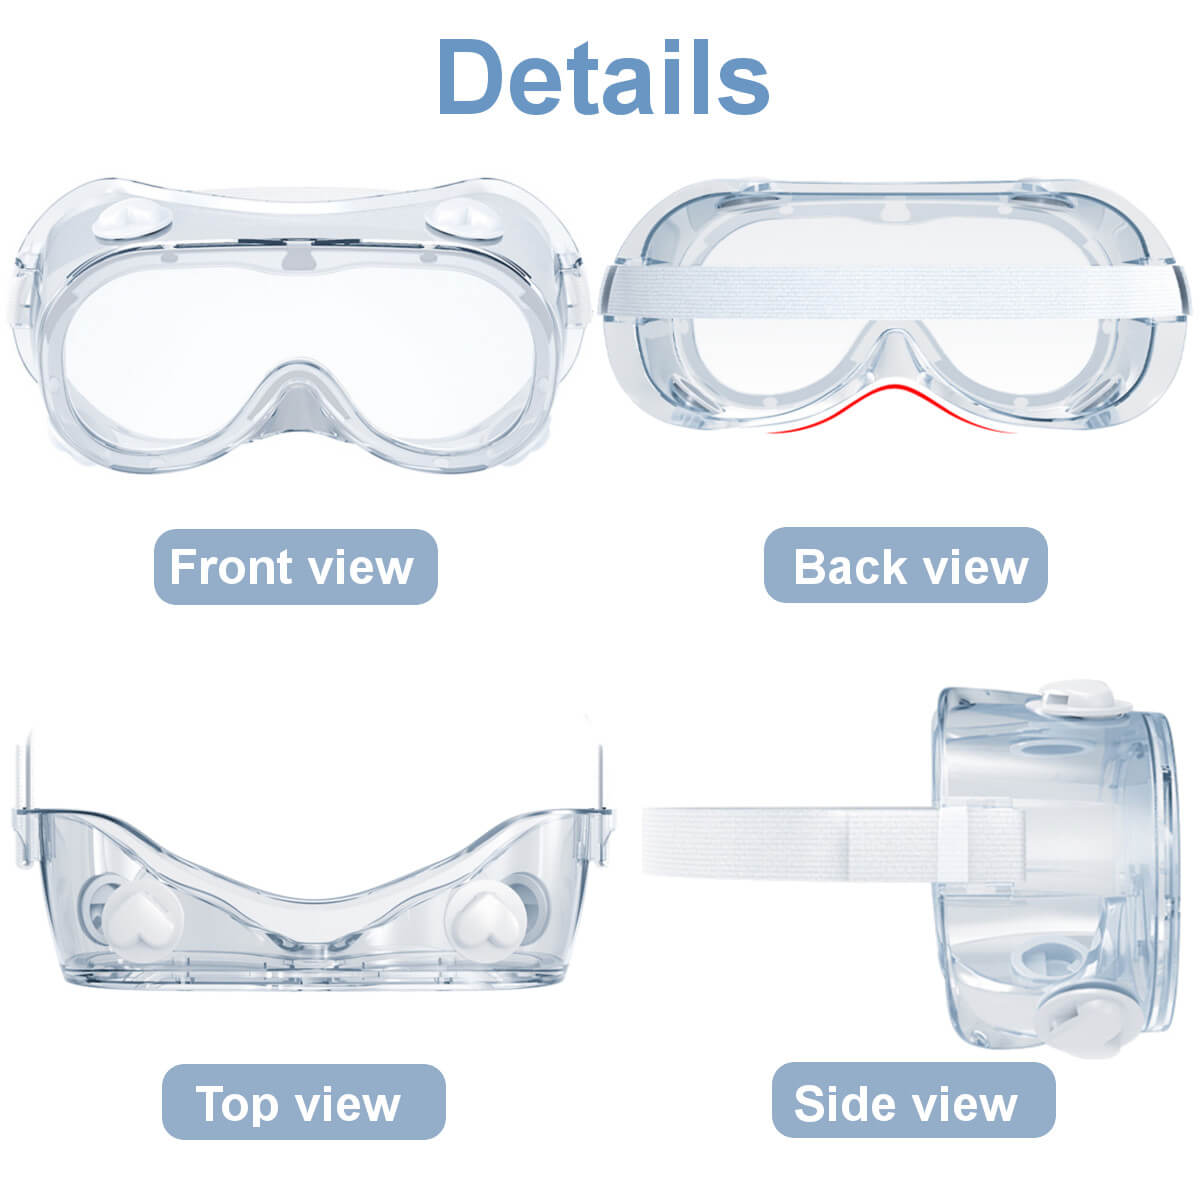 Medical goggles details display